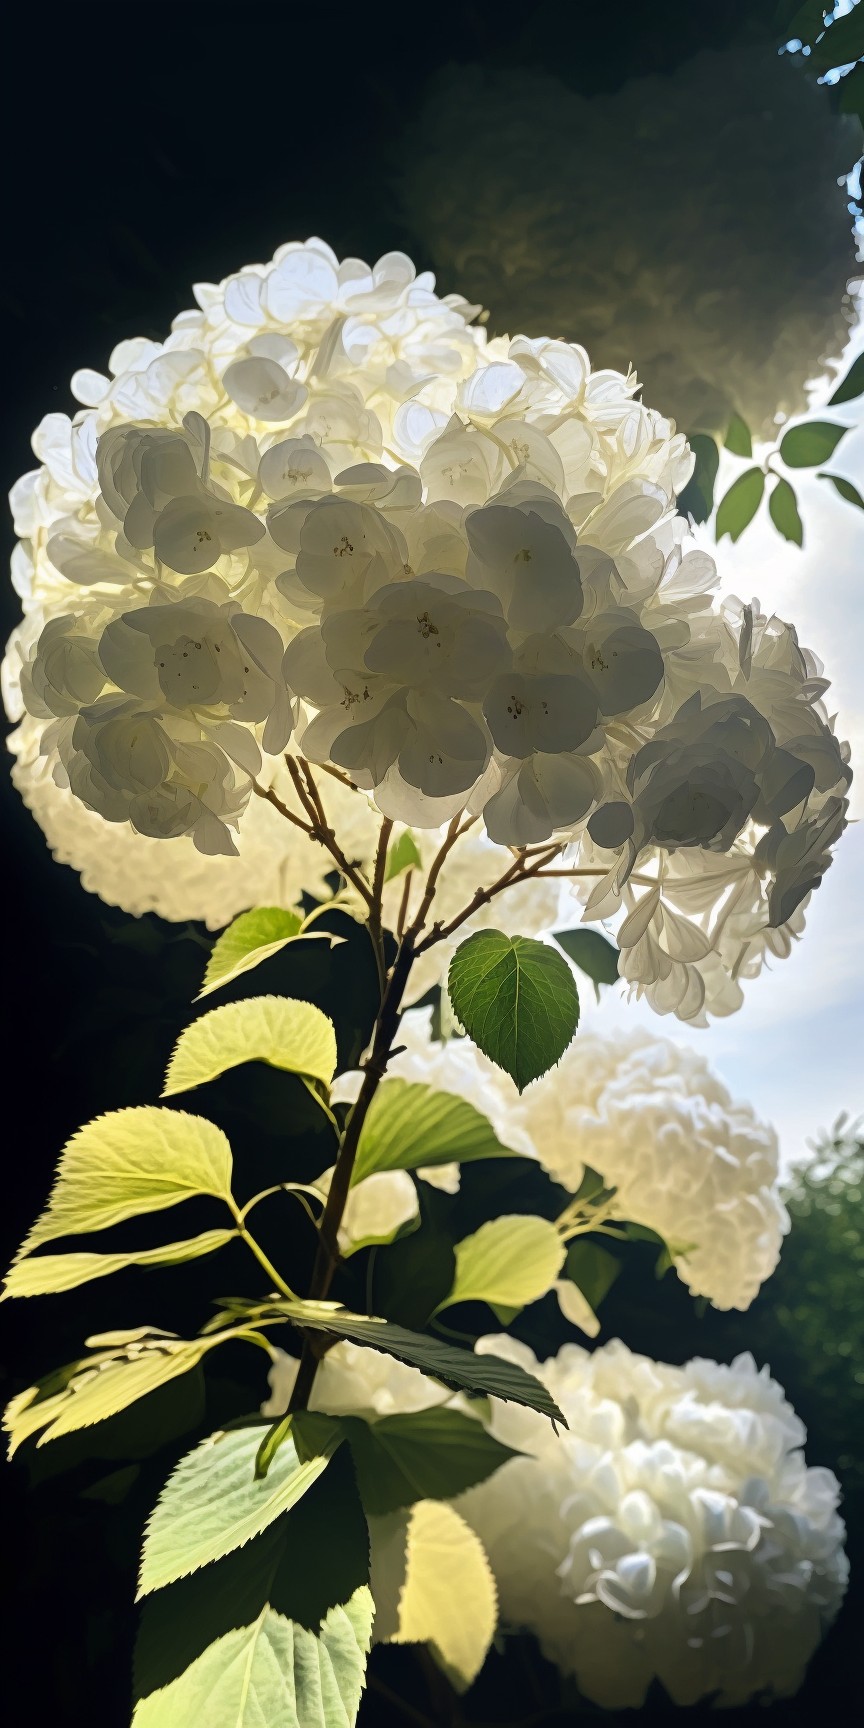 white hydrangea